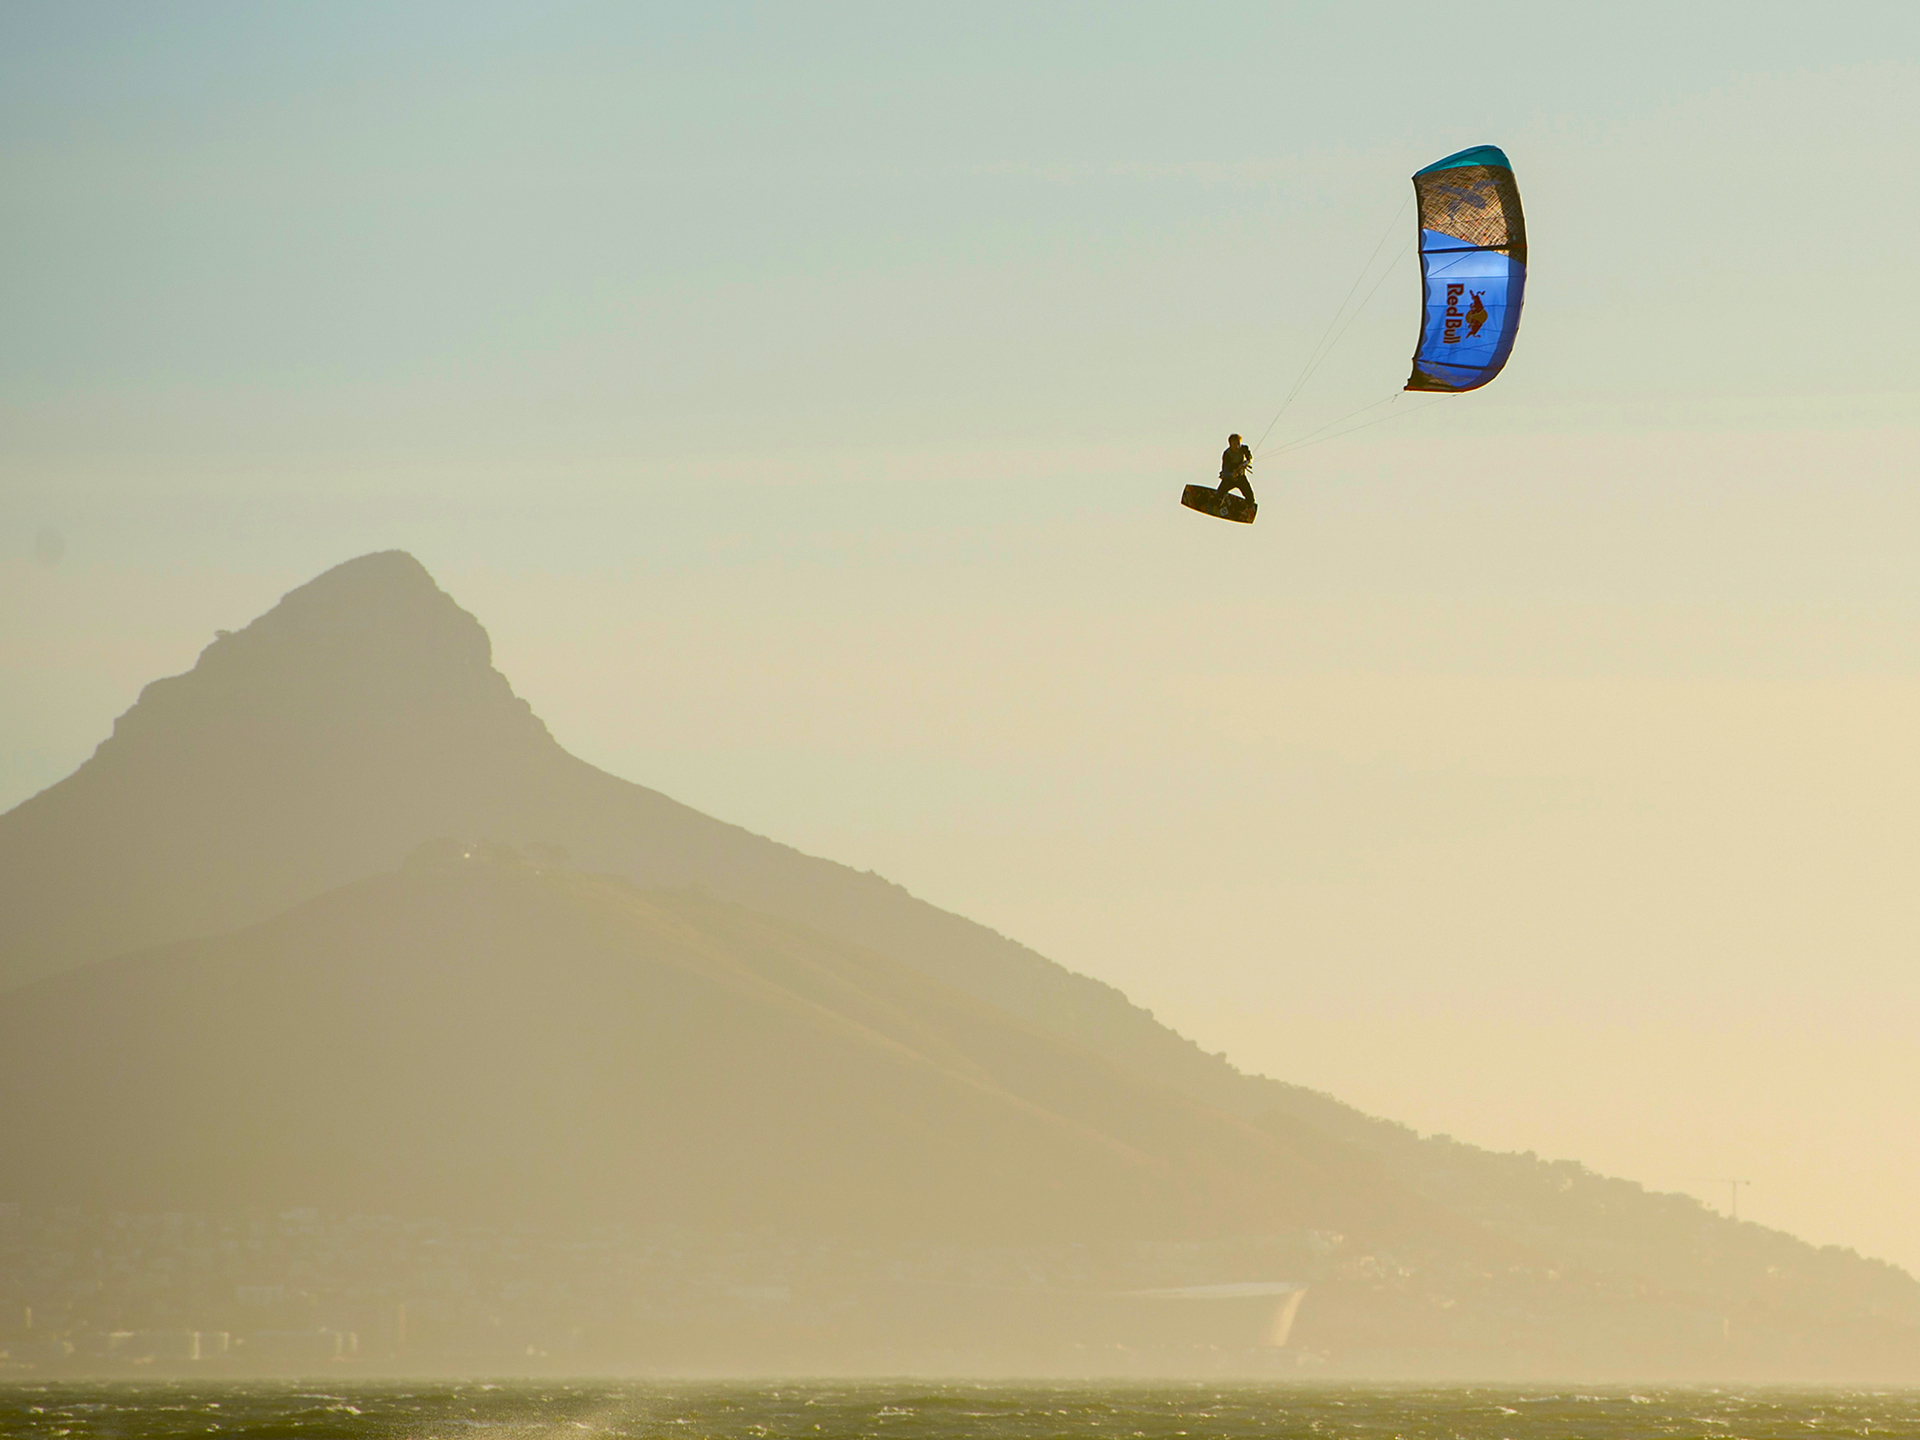 kitesurf wallpaper image - Ruben Lenten on the Best Extract in Cape Town - kitesurf megaloop jump - in resolution: Standard 4:3 1920 X 1440